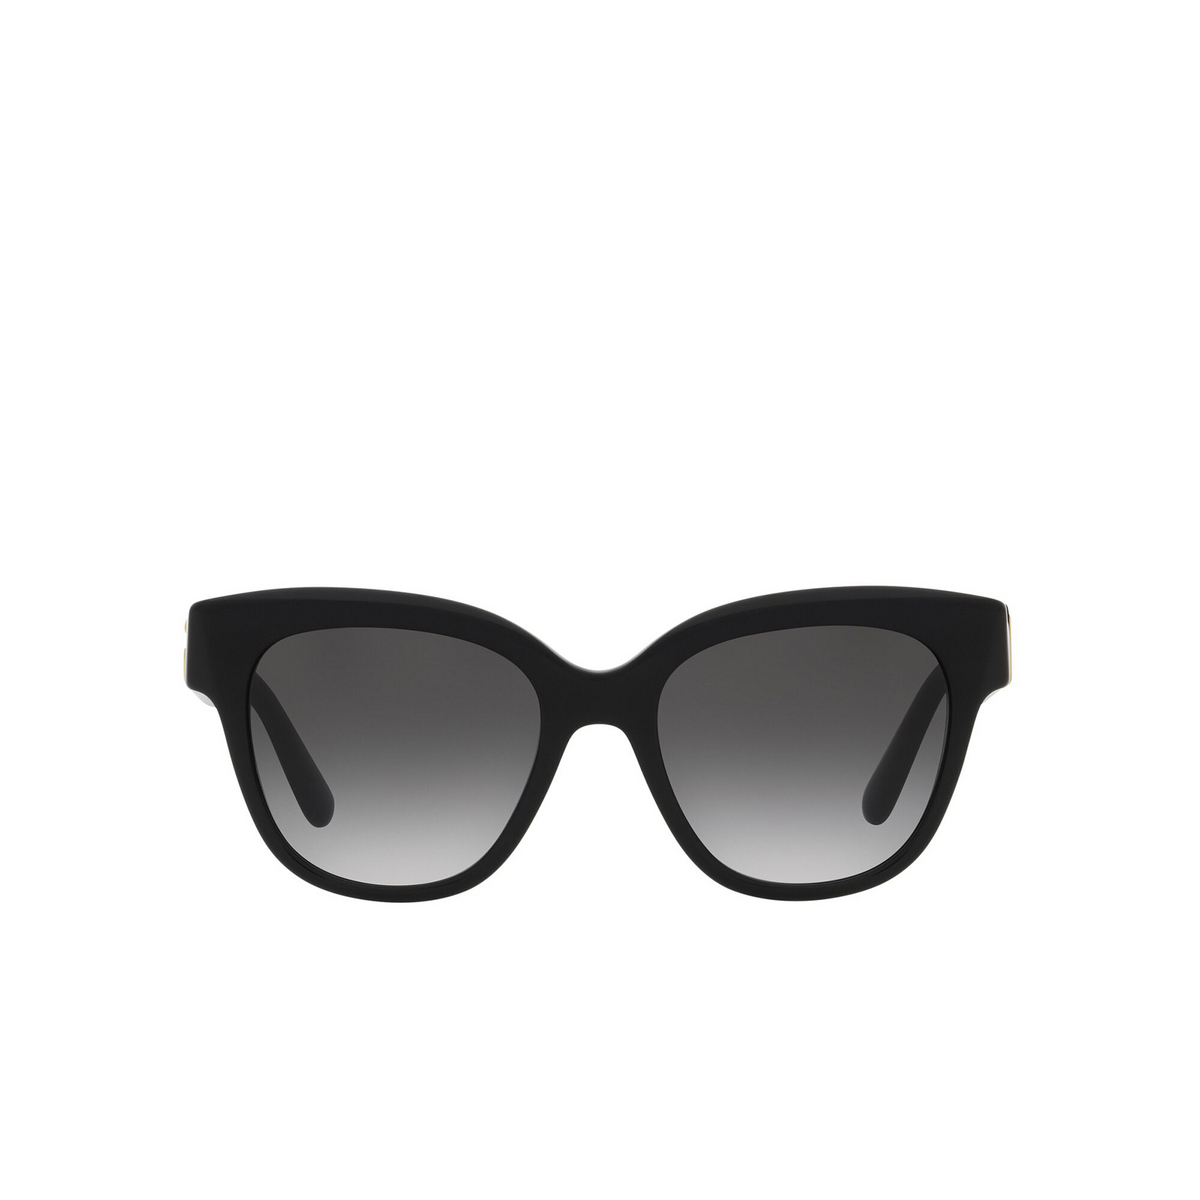 Dolce & Gabbana® Butterfly Sunglasses: DG4407 color Black 501/8G - front view.